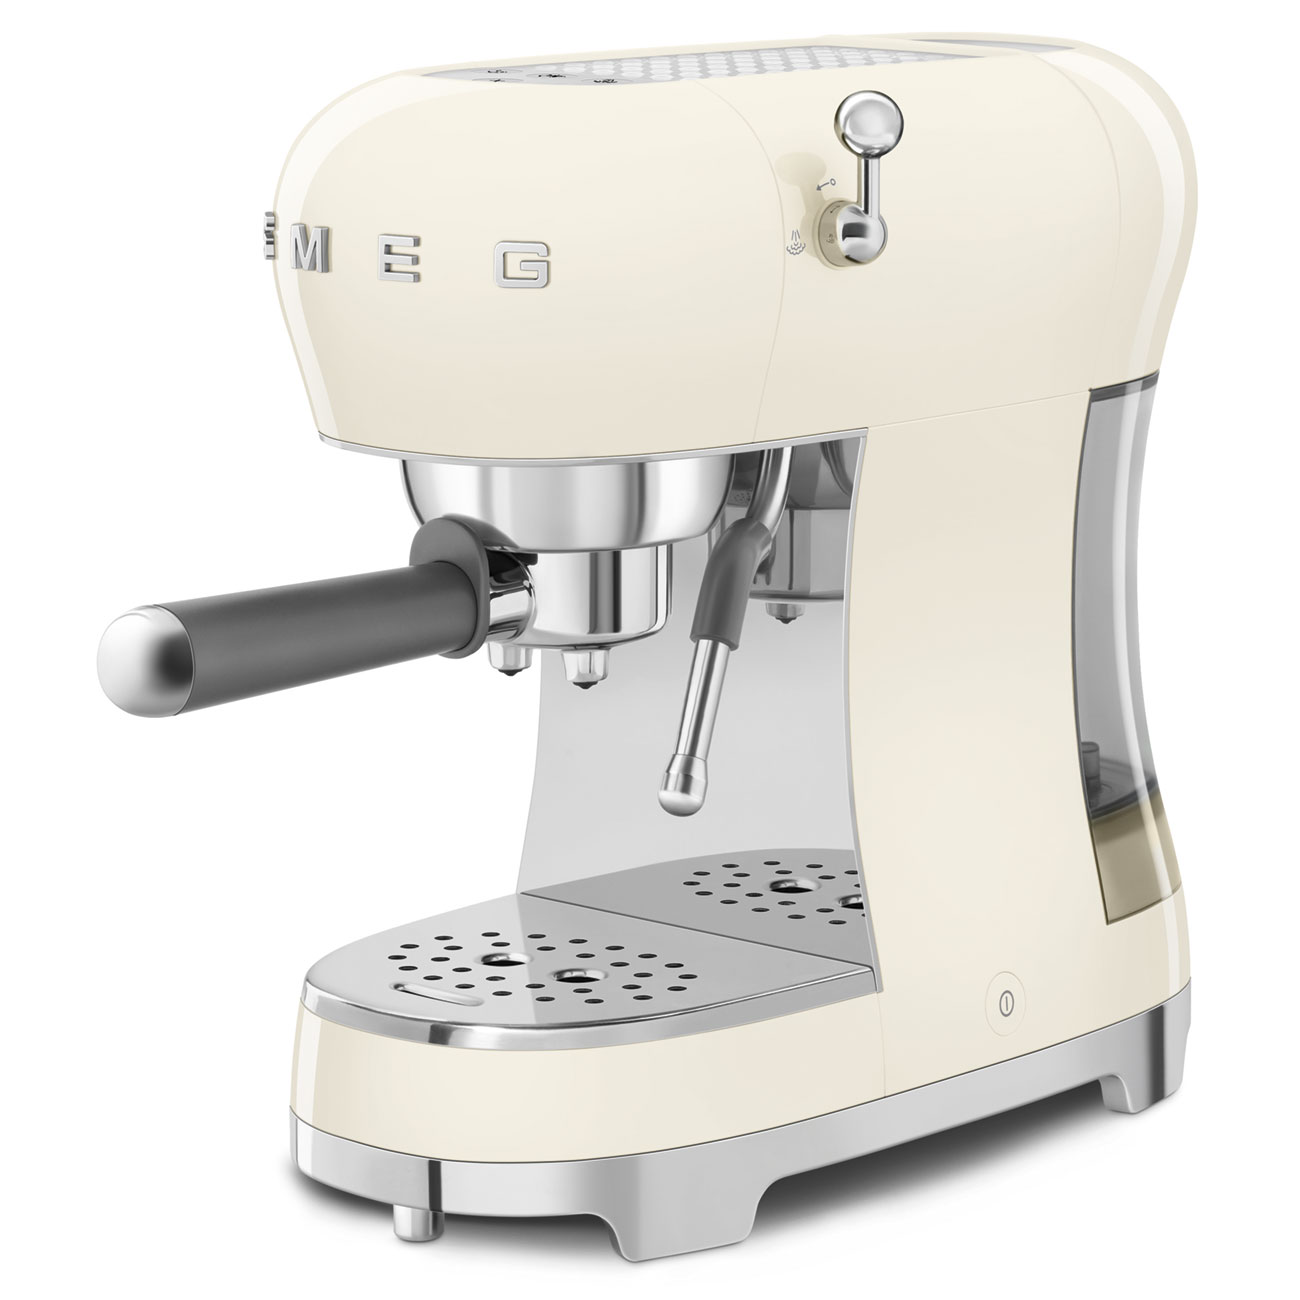 Smeg Cream Espresso Manual Coffee Machine with Steam Wand_4